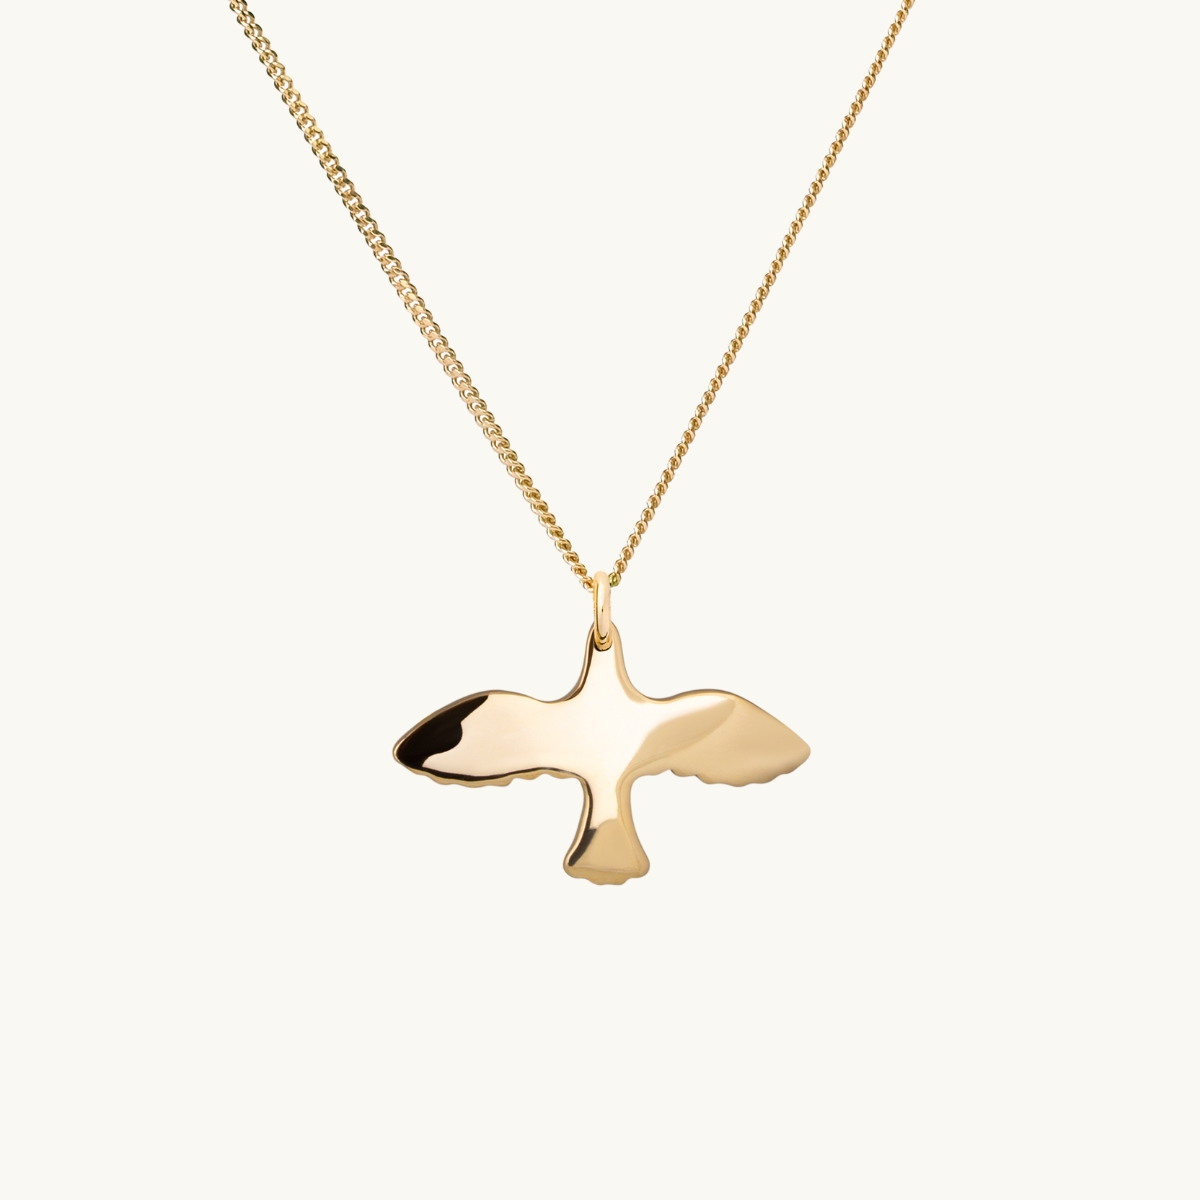 Dove necklace in 18K gold, dove pendant